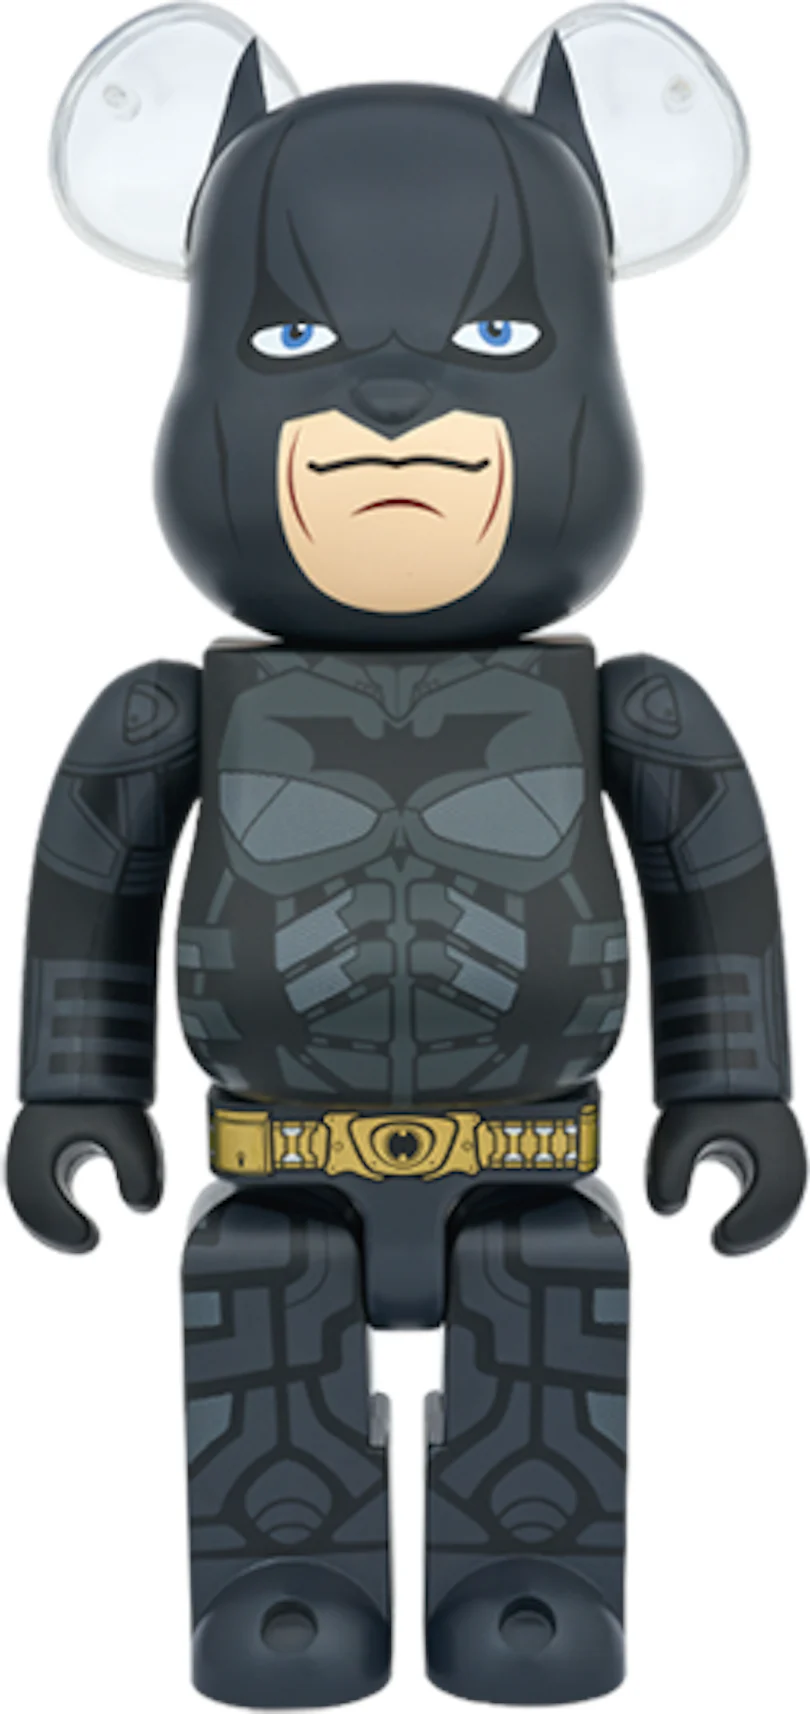 Bearbrick Batman (The Dark Knight Ver.) 400% Black